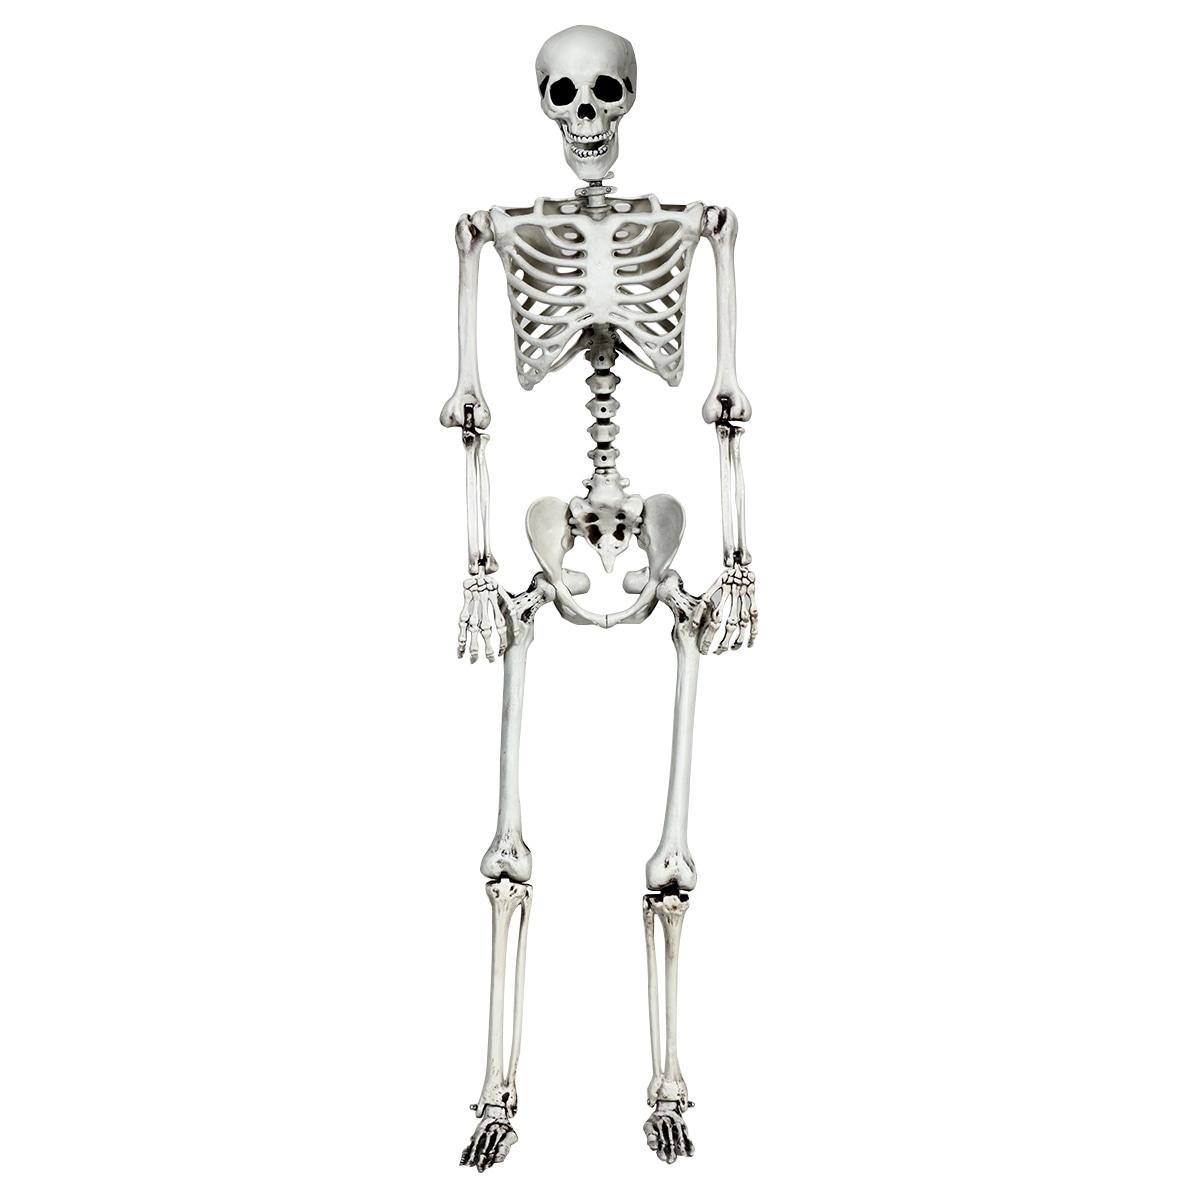 Skeleton Halloween Decorations at